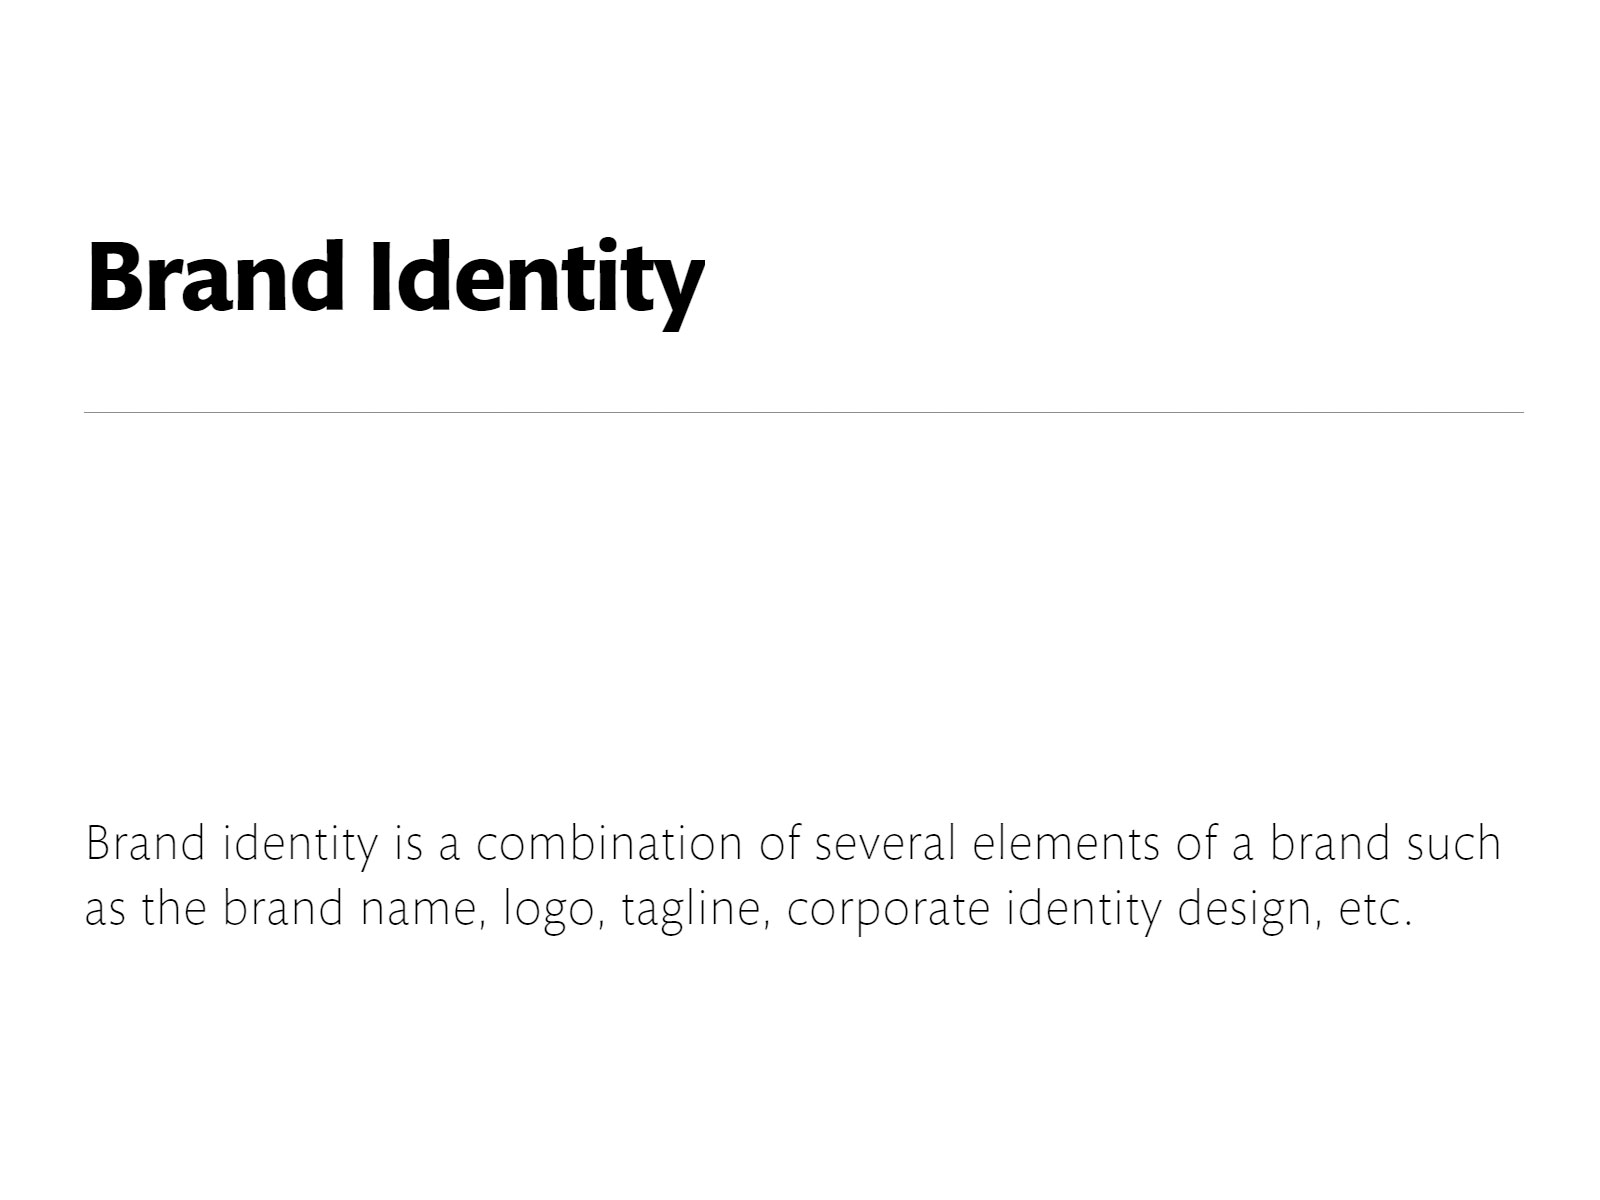 Brand Name, Logo, Tagline, Corporate Identity Design